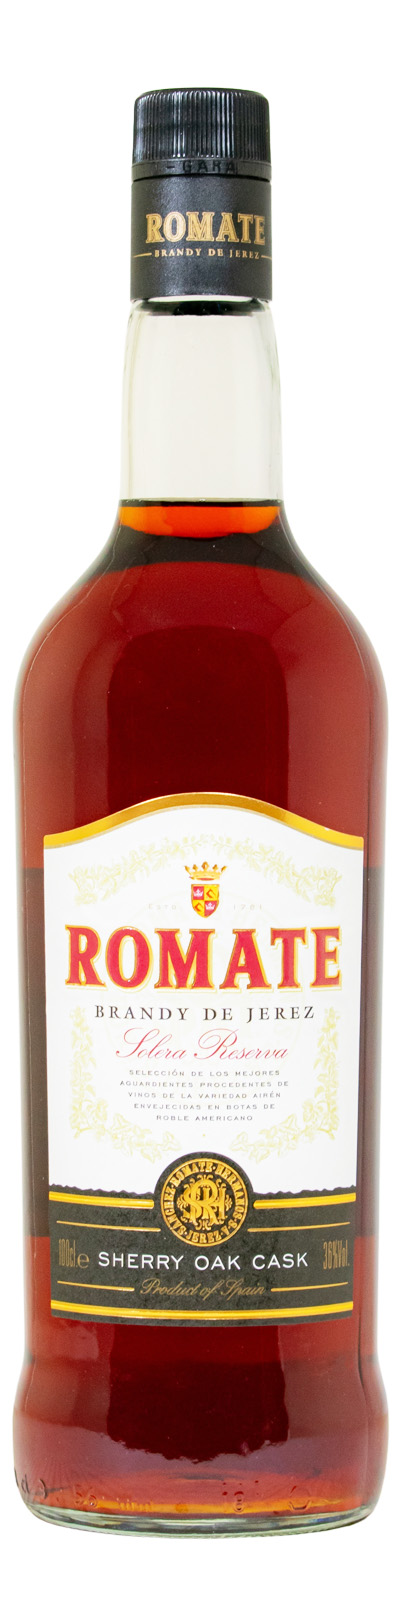 Romate Brandy Solera Reserva Brandy de Jerez - 1 Liter 36% vol